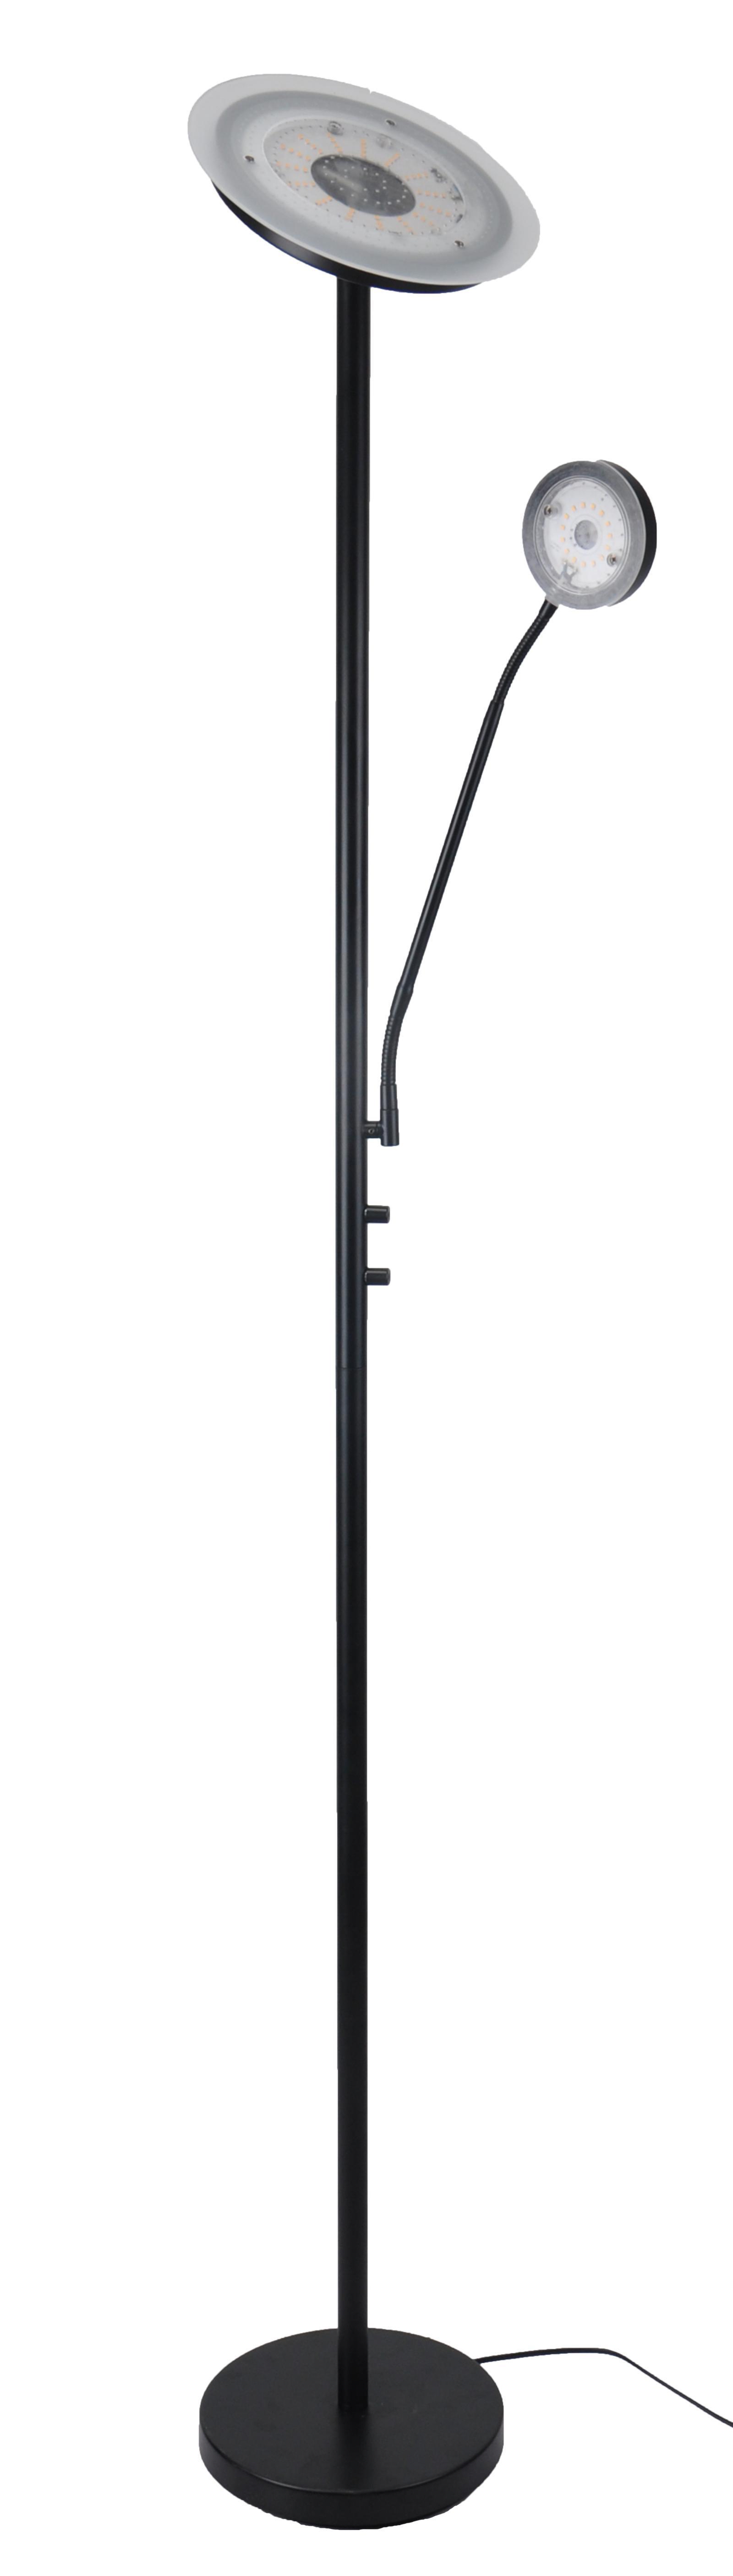 Stojací Led Svítidlo Minn, 26/180cm - bílá/černá, Moderní, kov/plast (26/180cm) - Premium Living